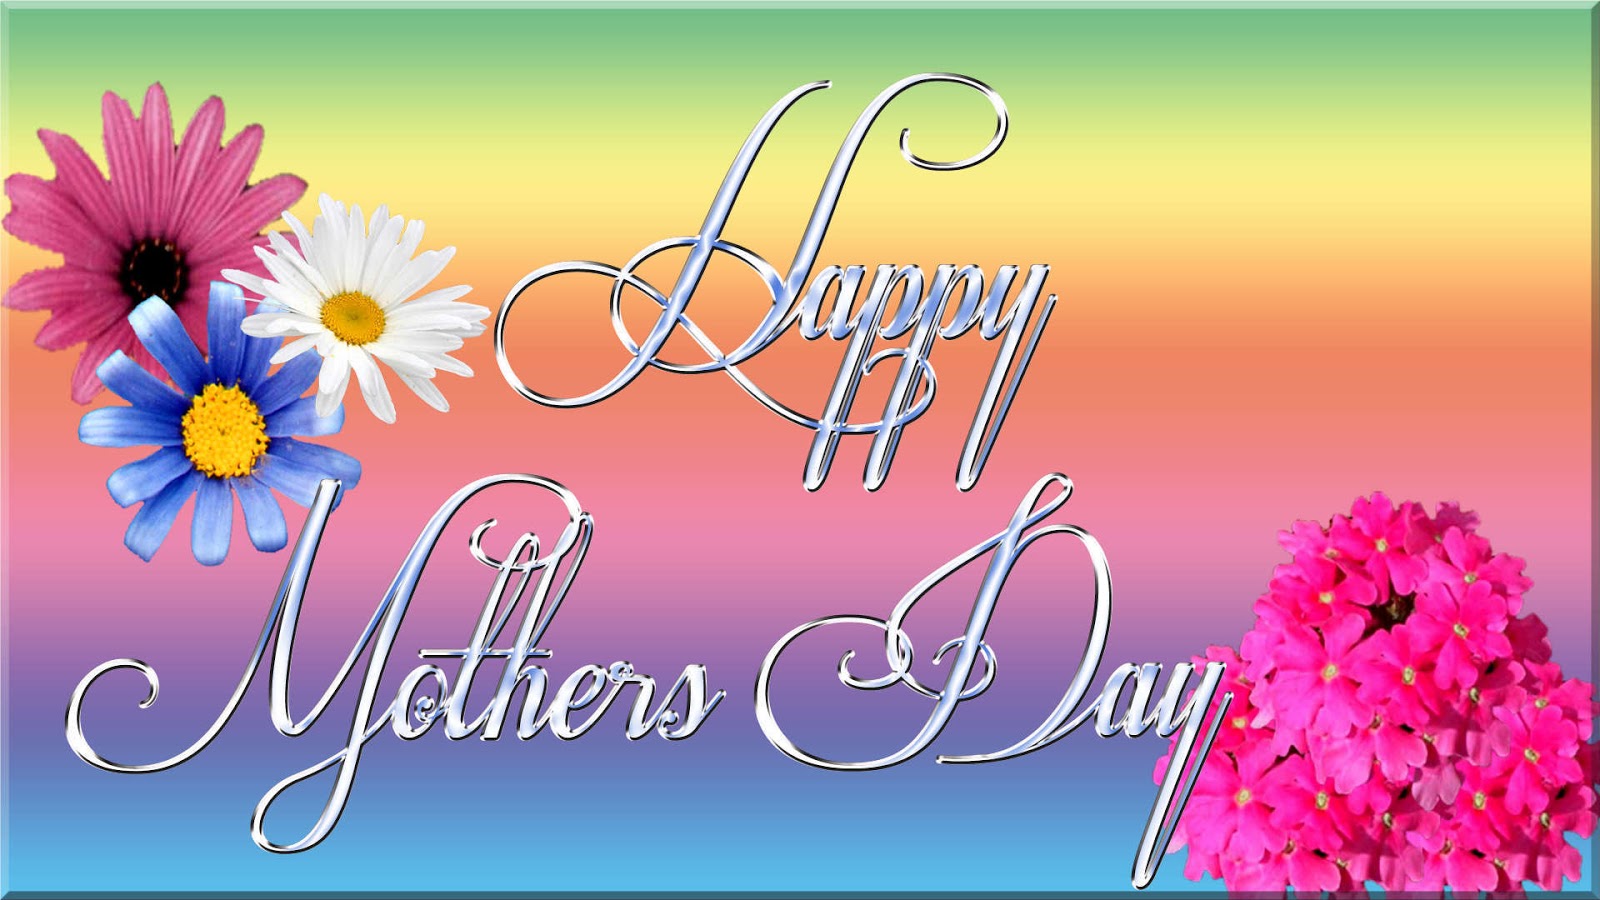 Mothers Day HD Image Wallpaper Beautiful